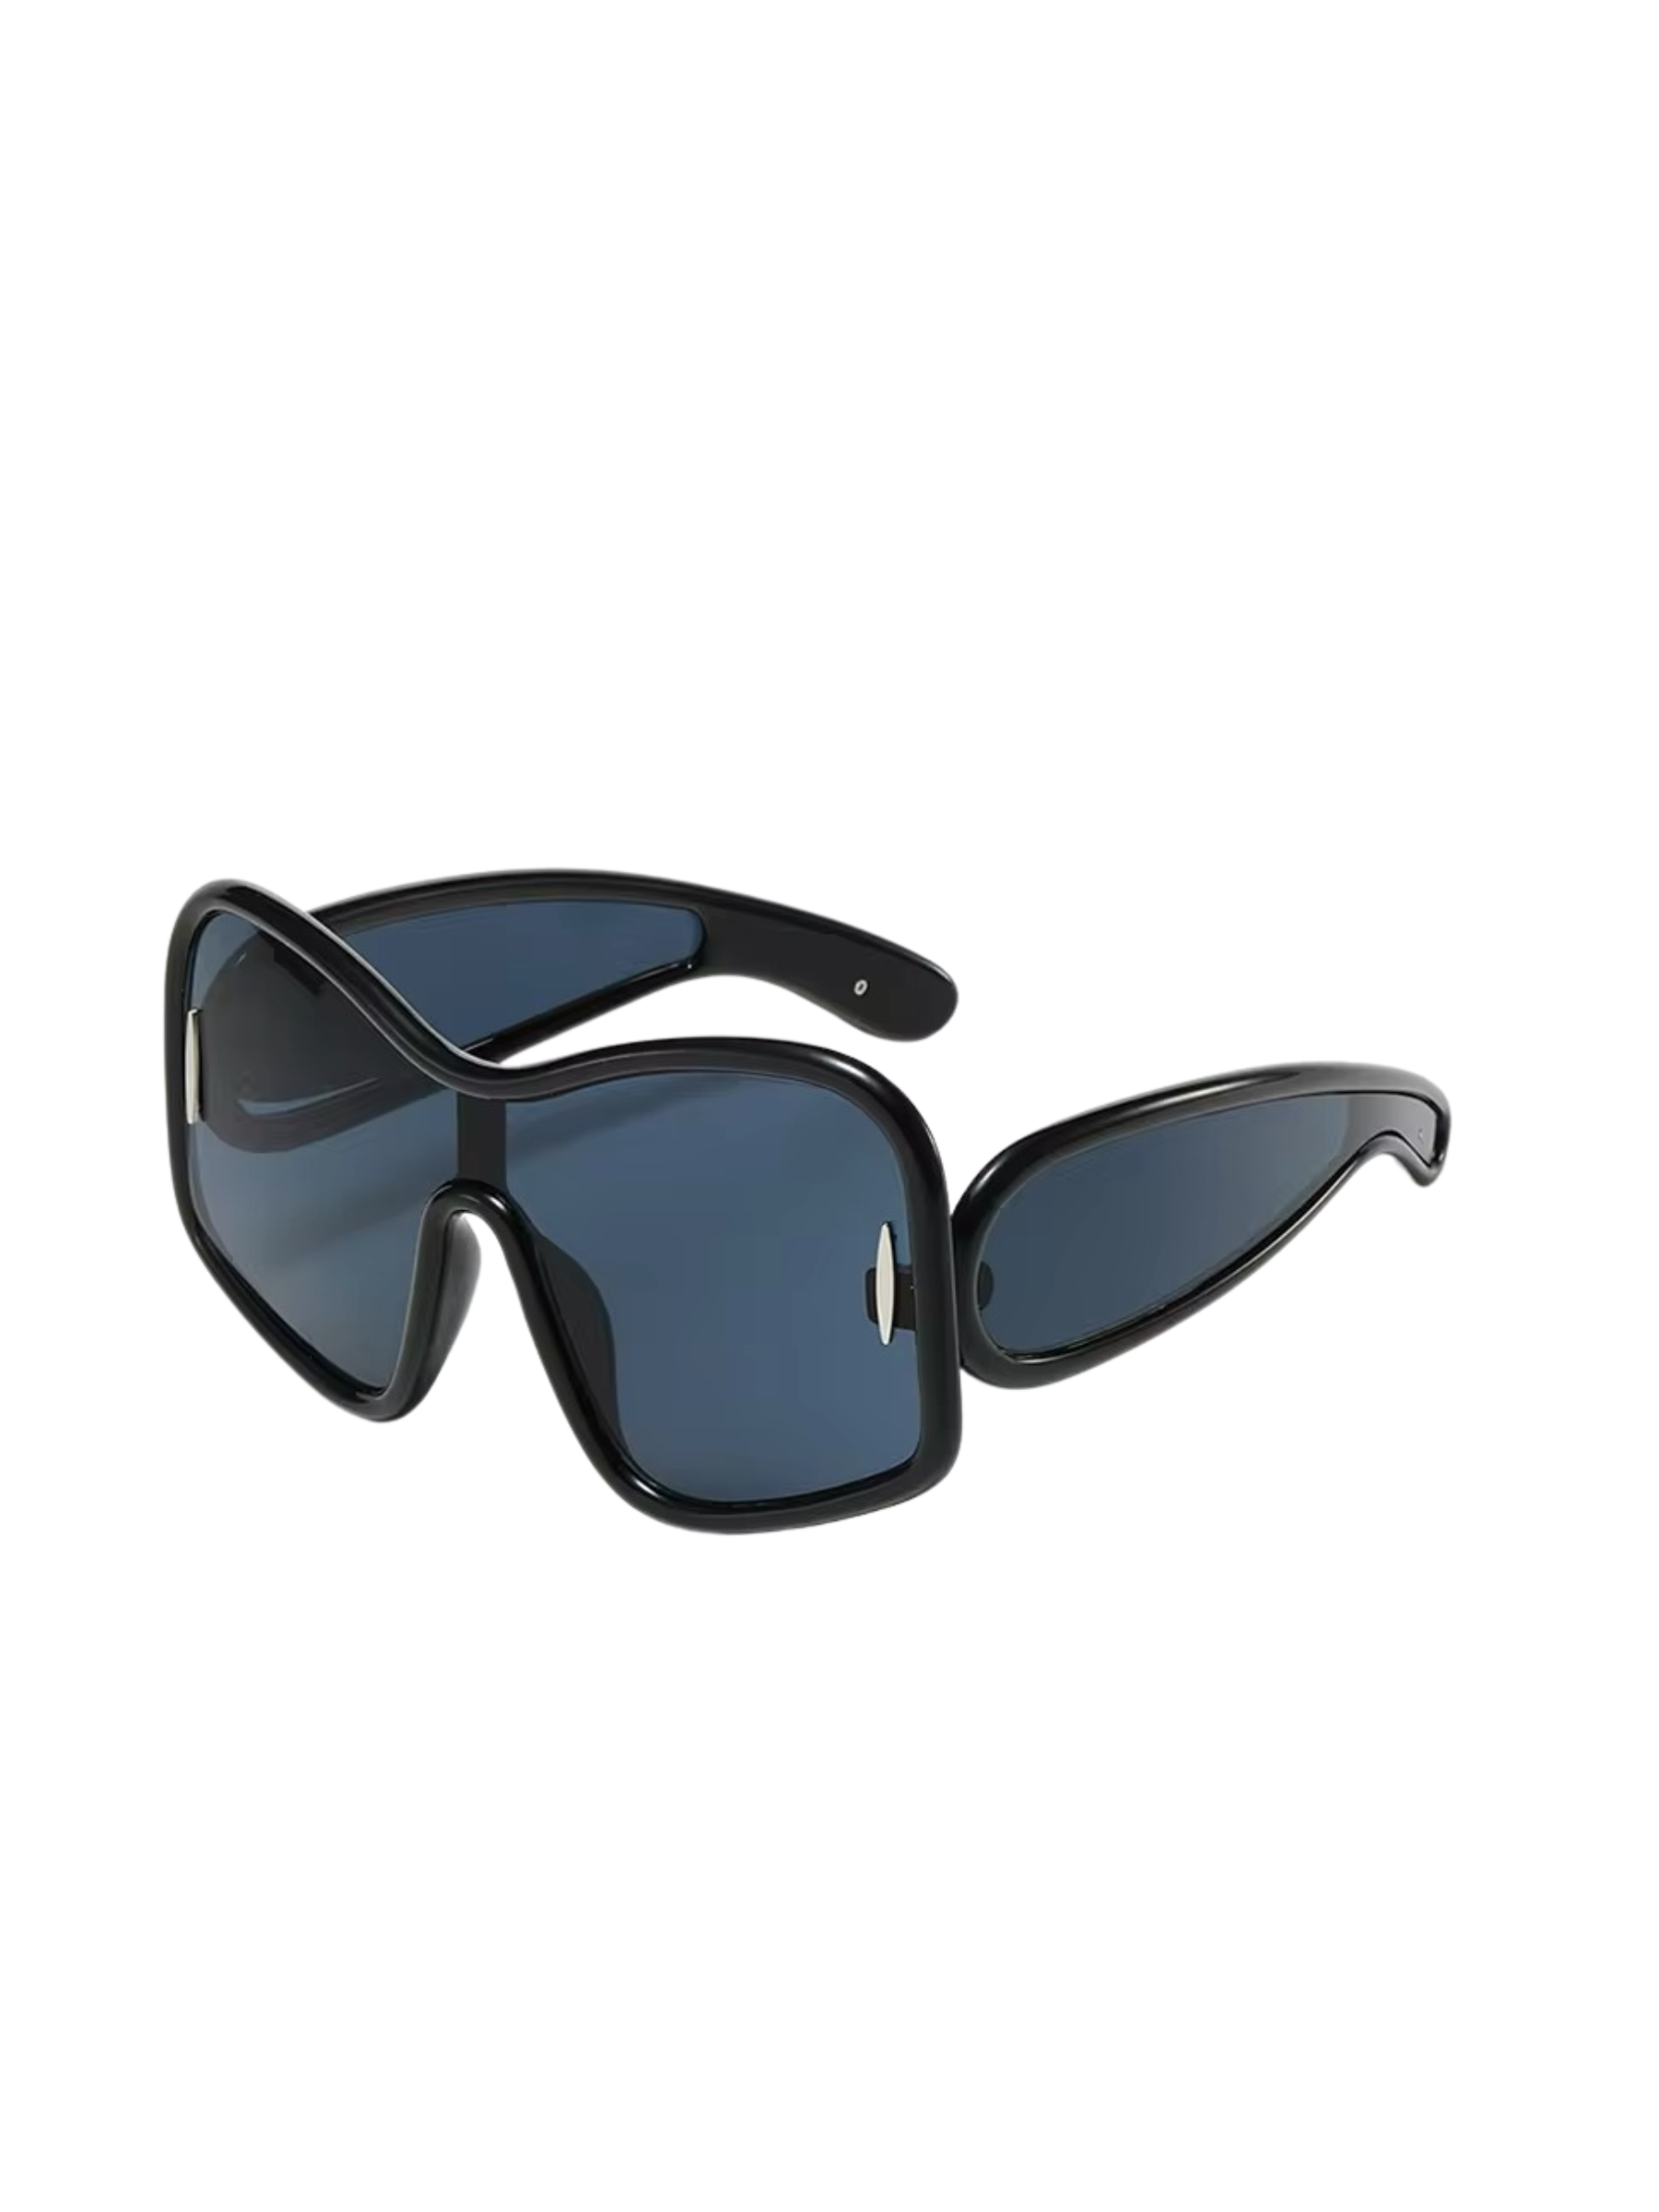 GOLDxTEAL black oversized fashion sunglasses.